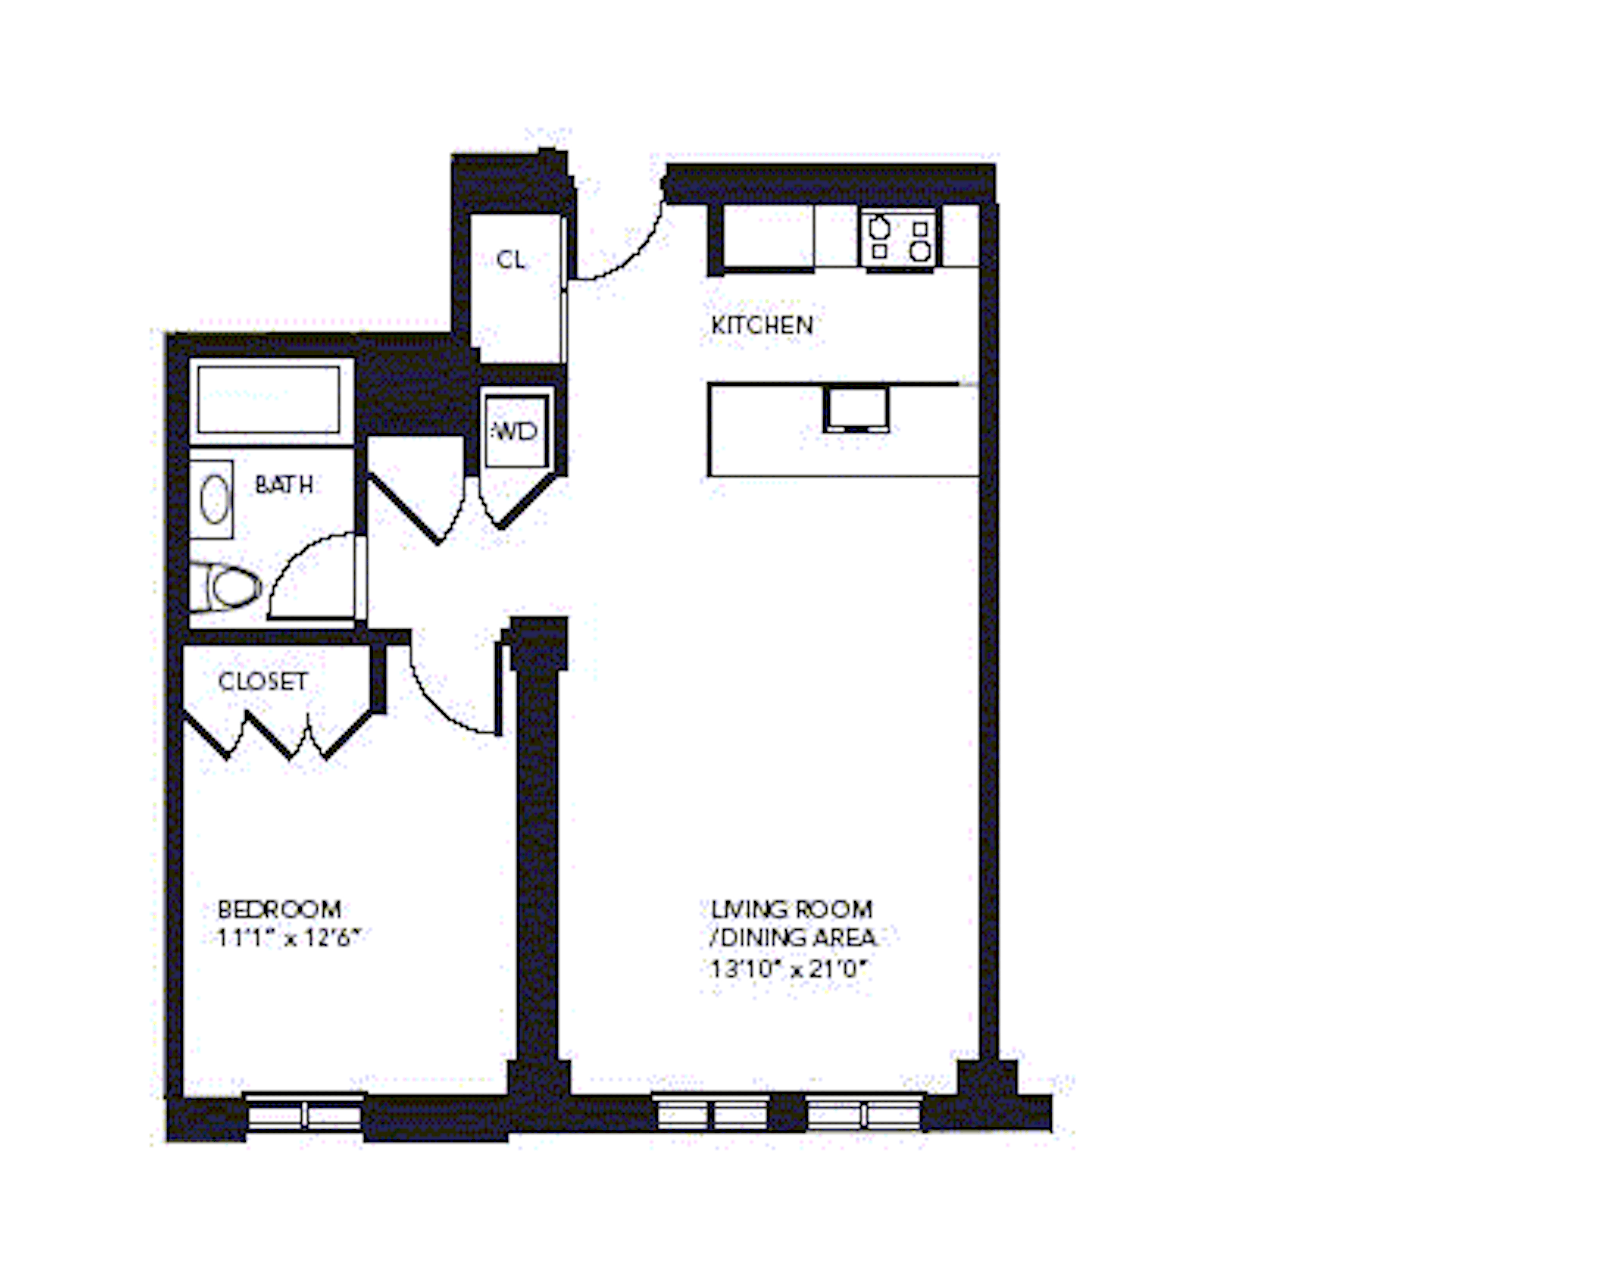 Floorplan for 85 Adams Street, 10B